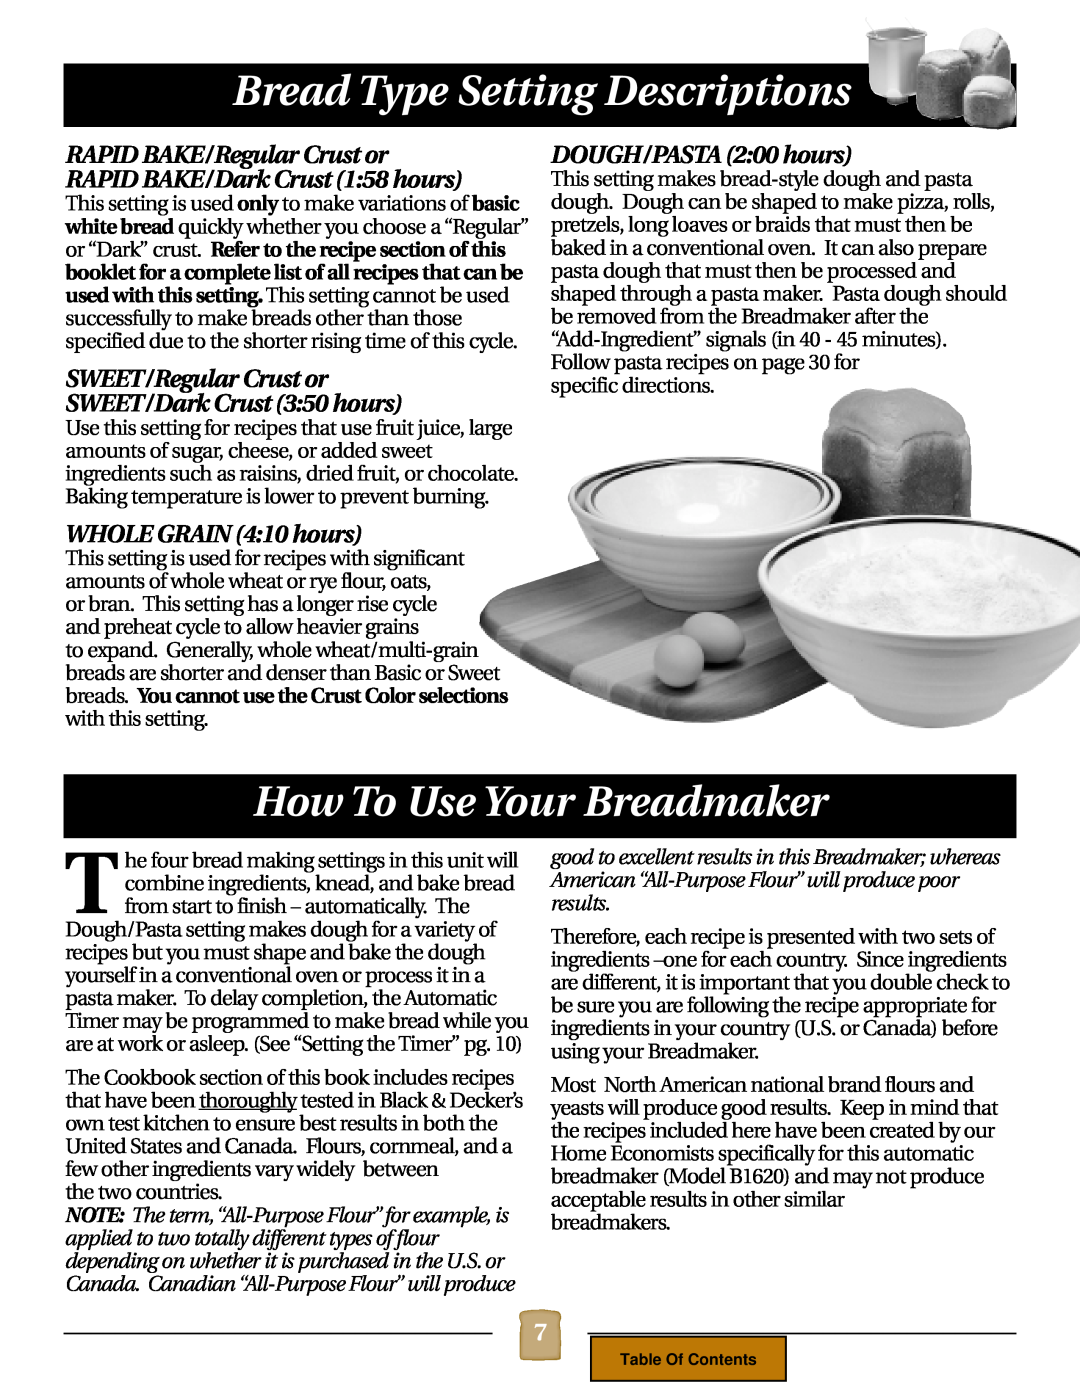 Black & Decker B1620 How To Use Your Breadmaker, Bread Type Setting Descriptions, SWEET/Regular Crust or 